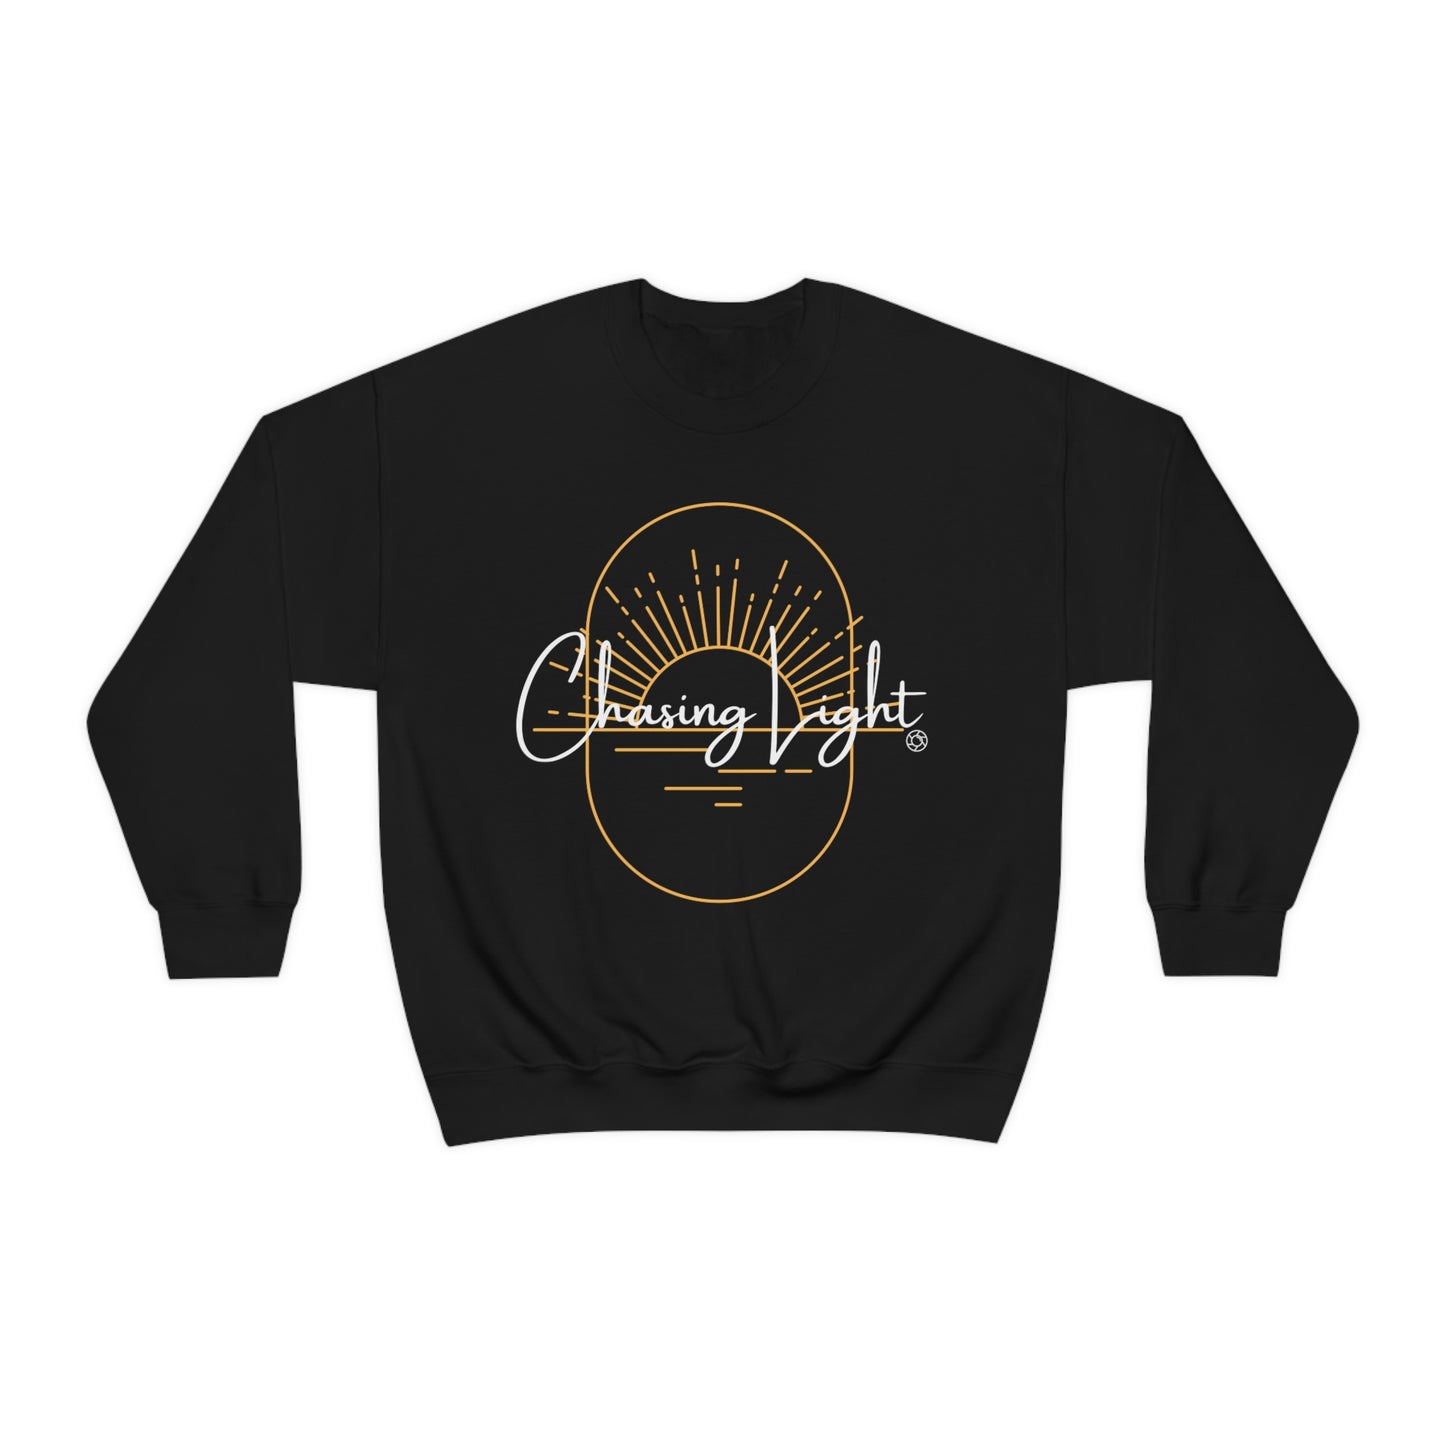 Chasing Light - Heavy Blend™ Crewneck Sweatshirt